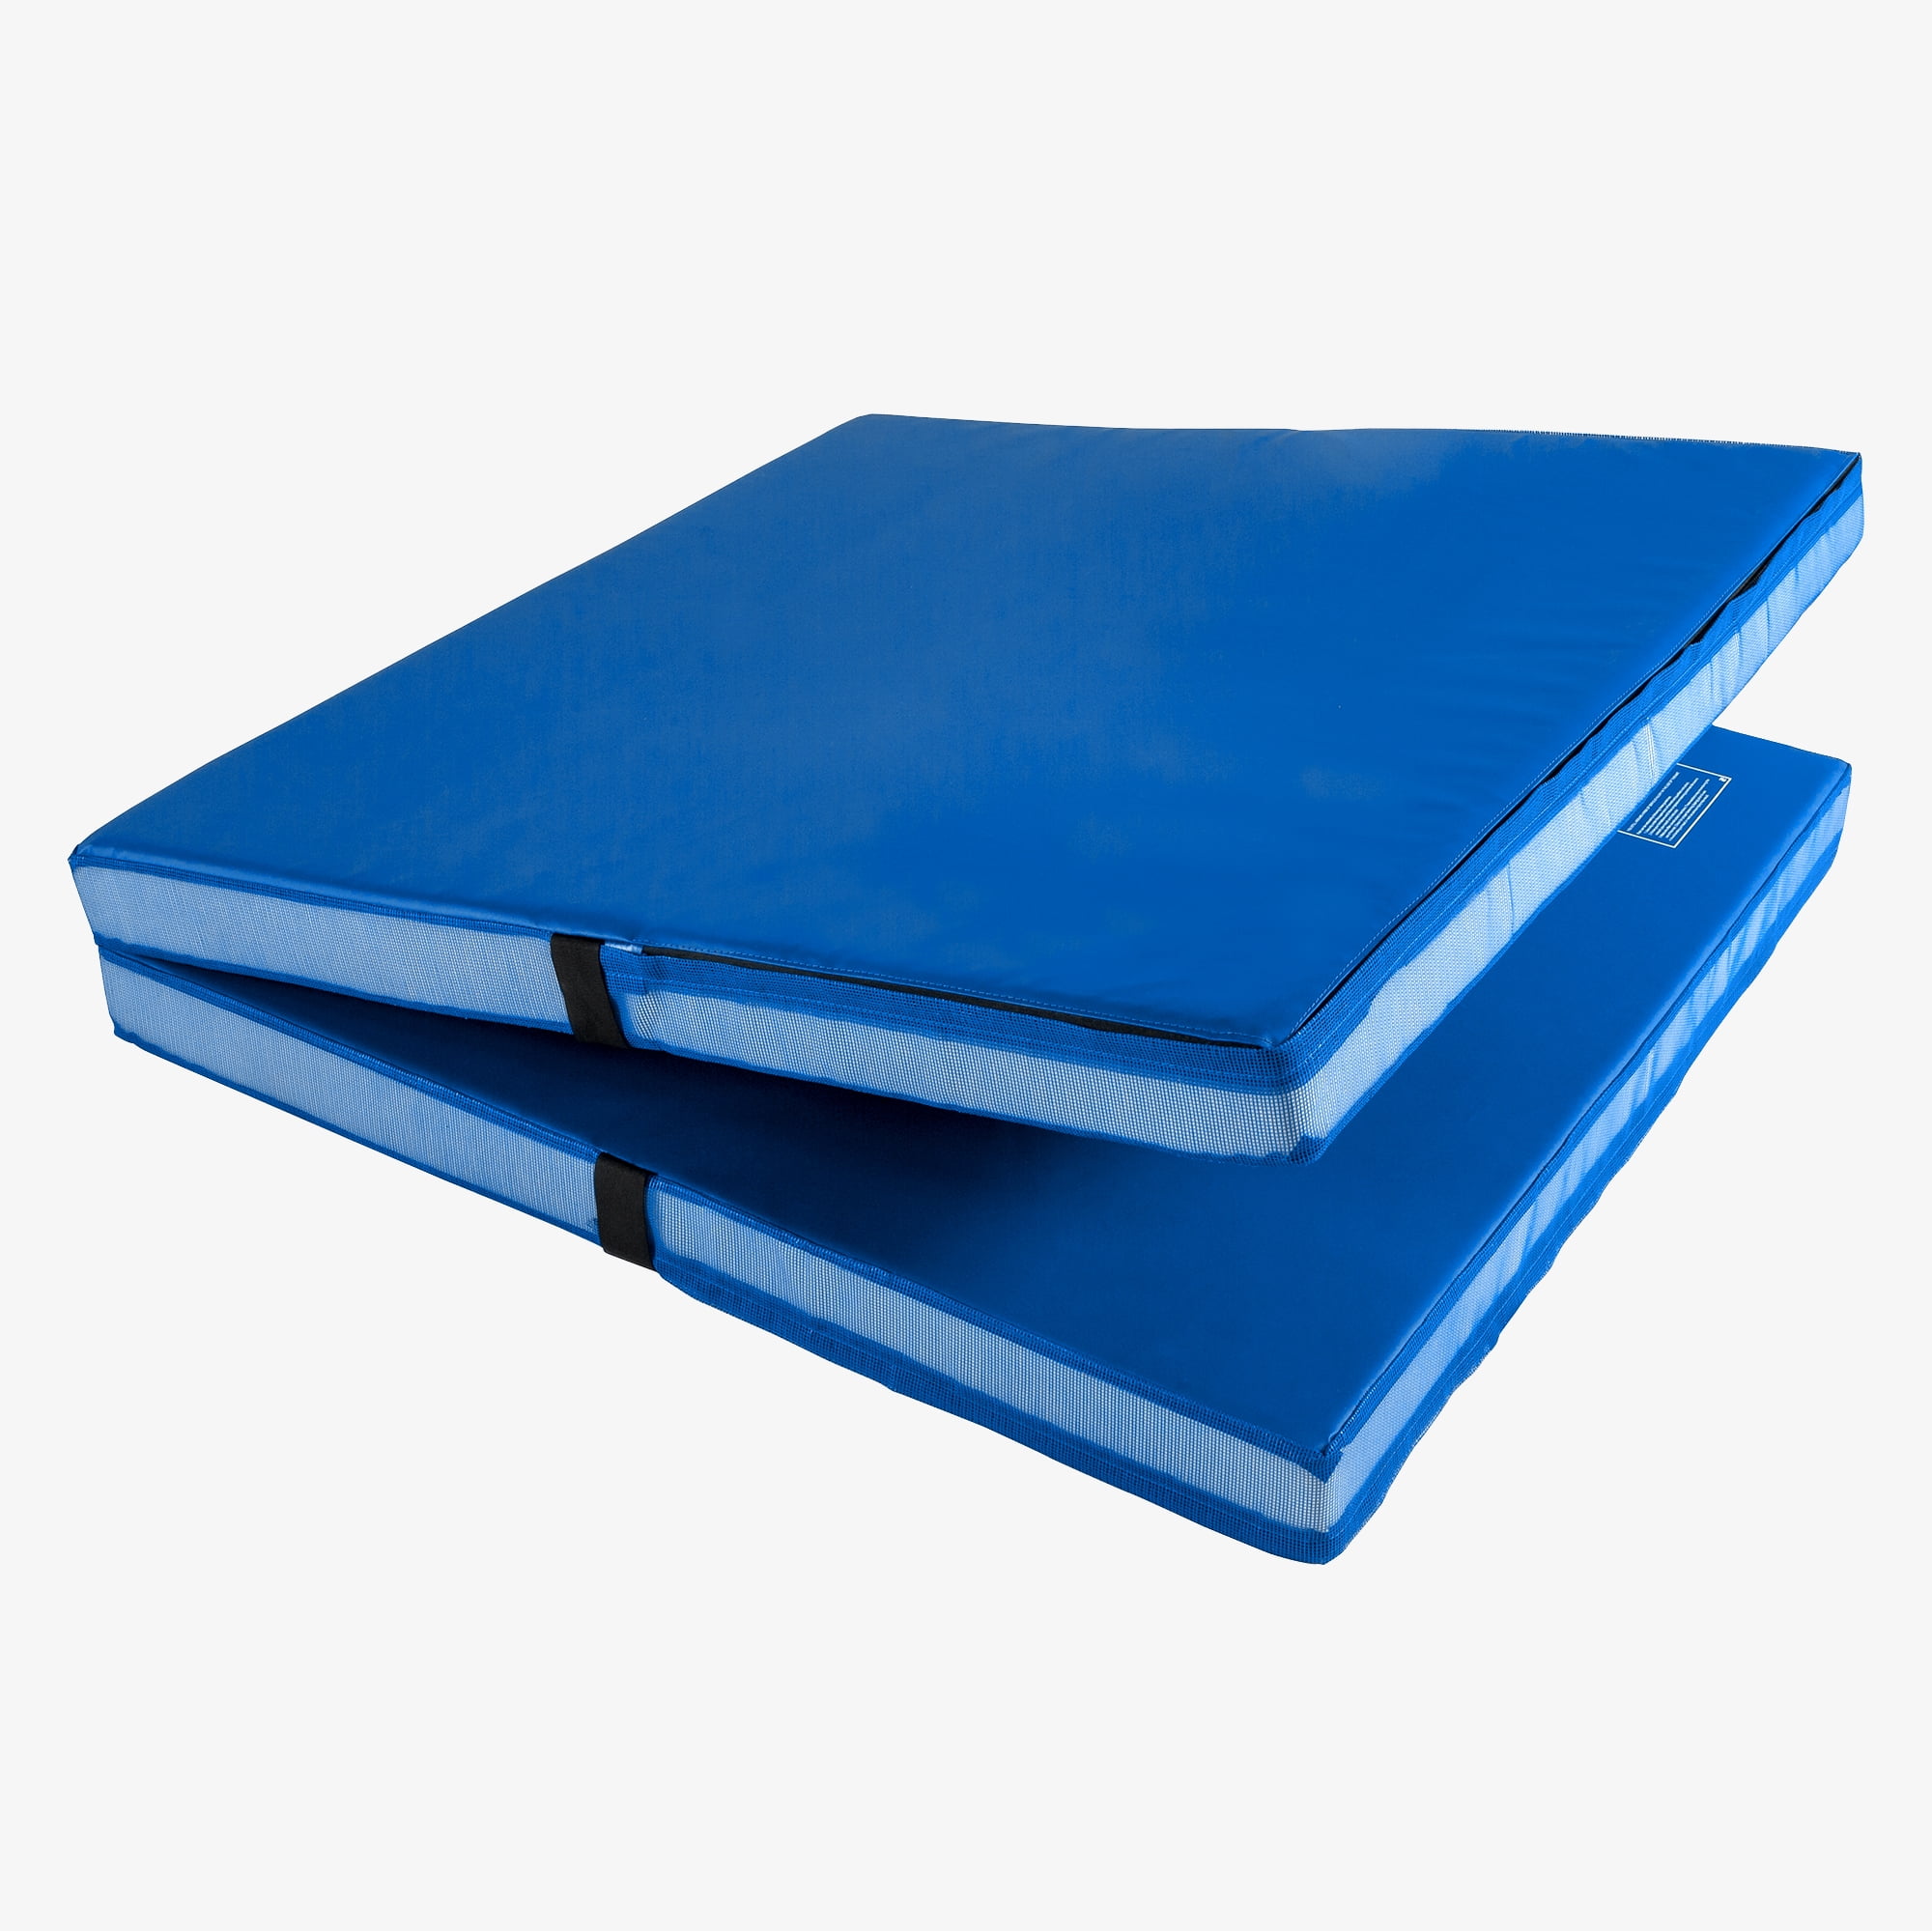 We Sell Mats 12 inch Thick Bifolding Gymnastics Crash Landing Mat Pad, Safety